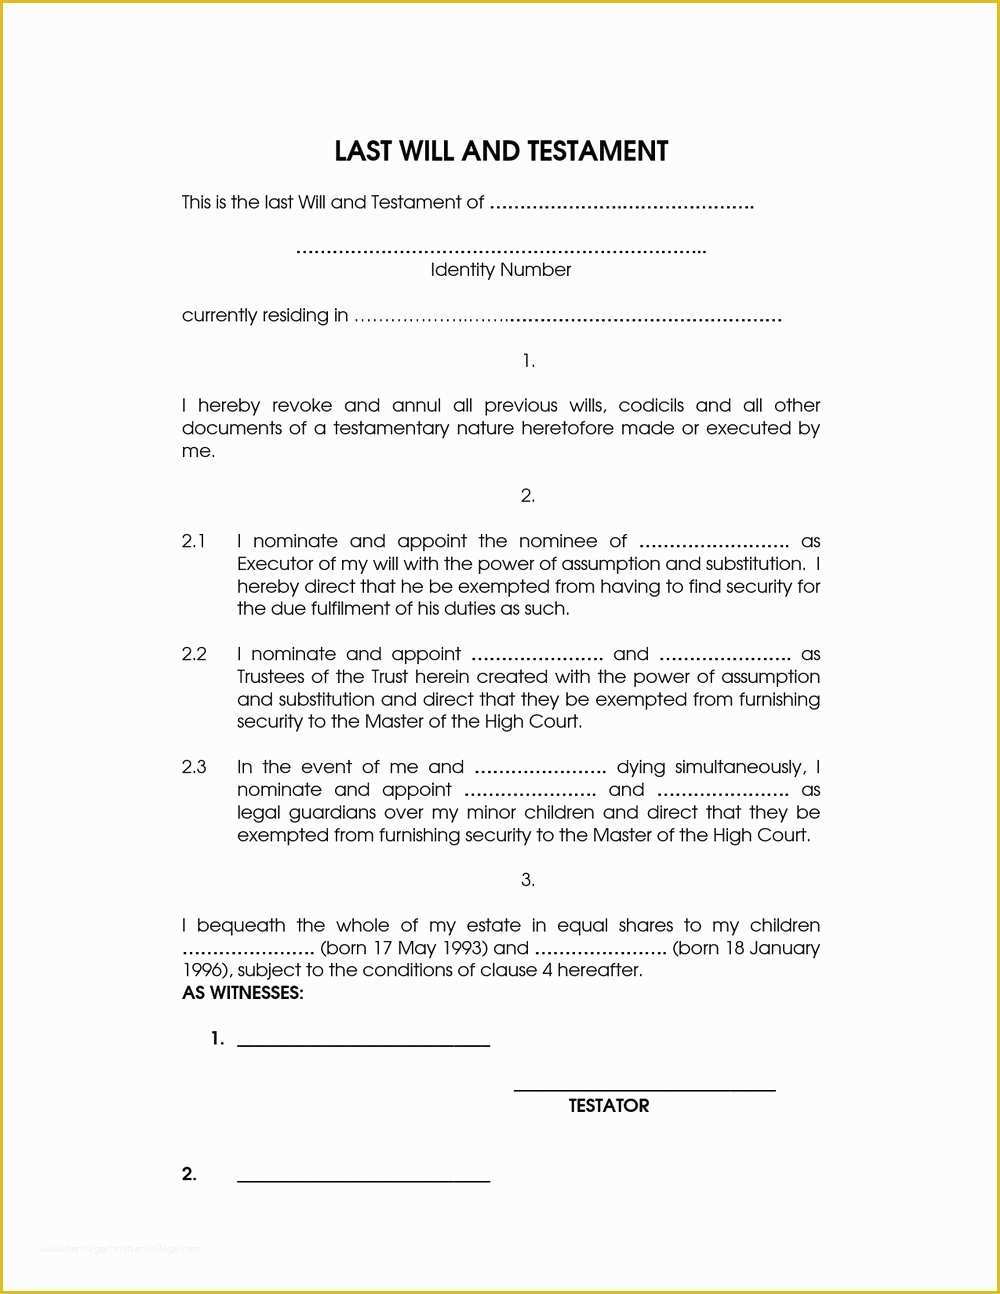 Last Will and Testament Australia Template Free Of Ez Legal forms Last Will and Testament forms 6547